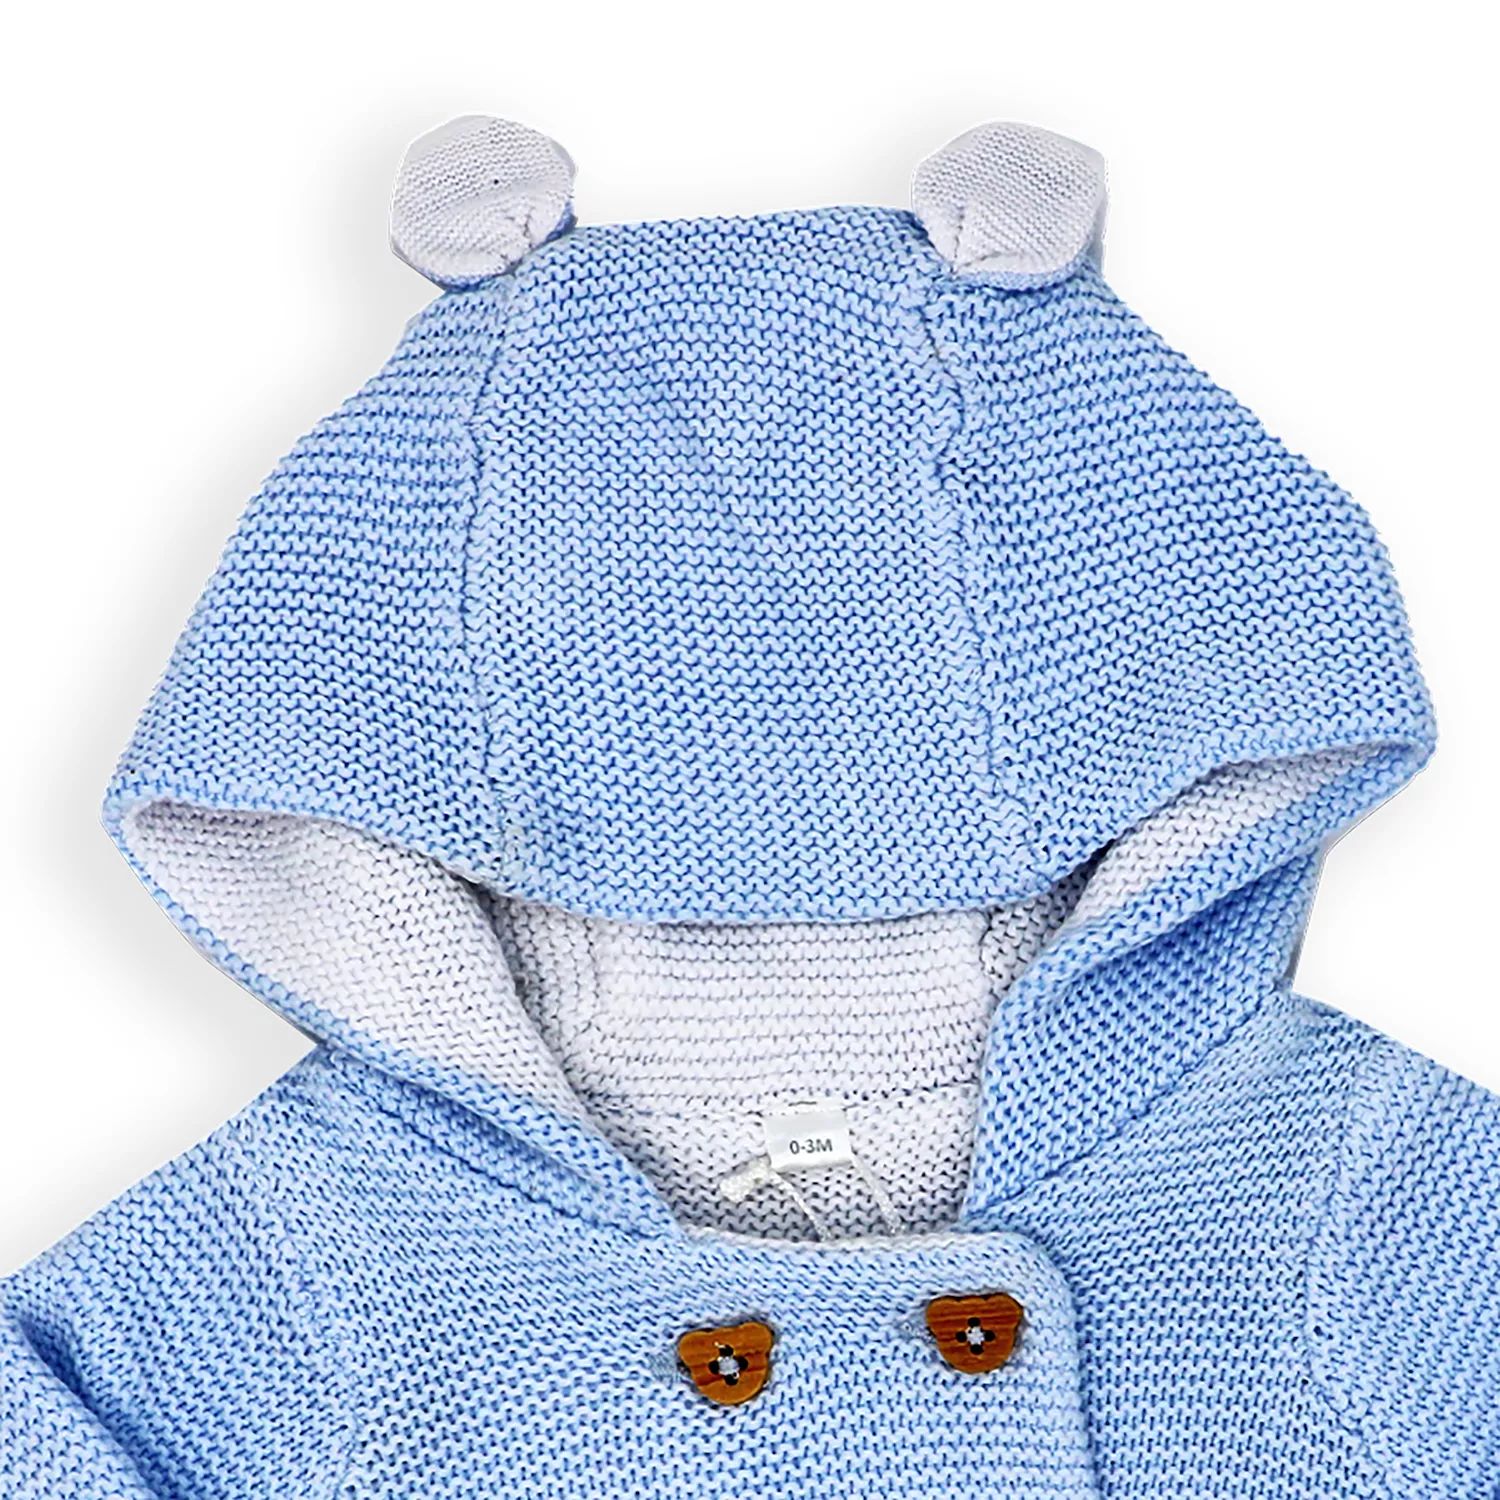 bye bye paris mother baby care bag hi̇gh quality warranty period month 12 Синий комплект из 2 вязаных свитеров с капюшоном для маленьких мальчиков Rock A Bye Baby Boutique